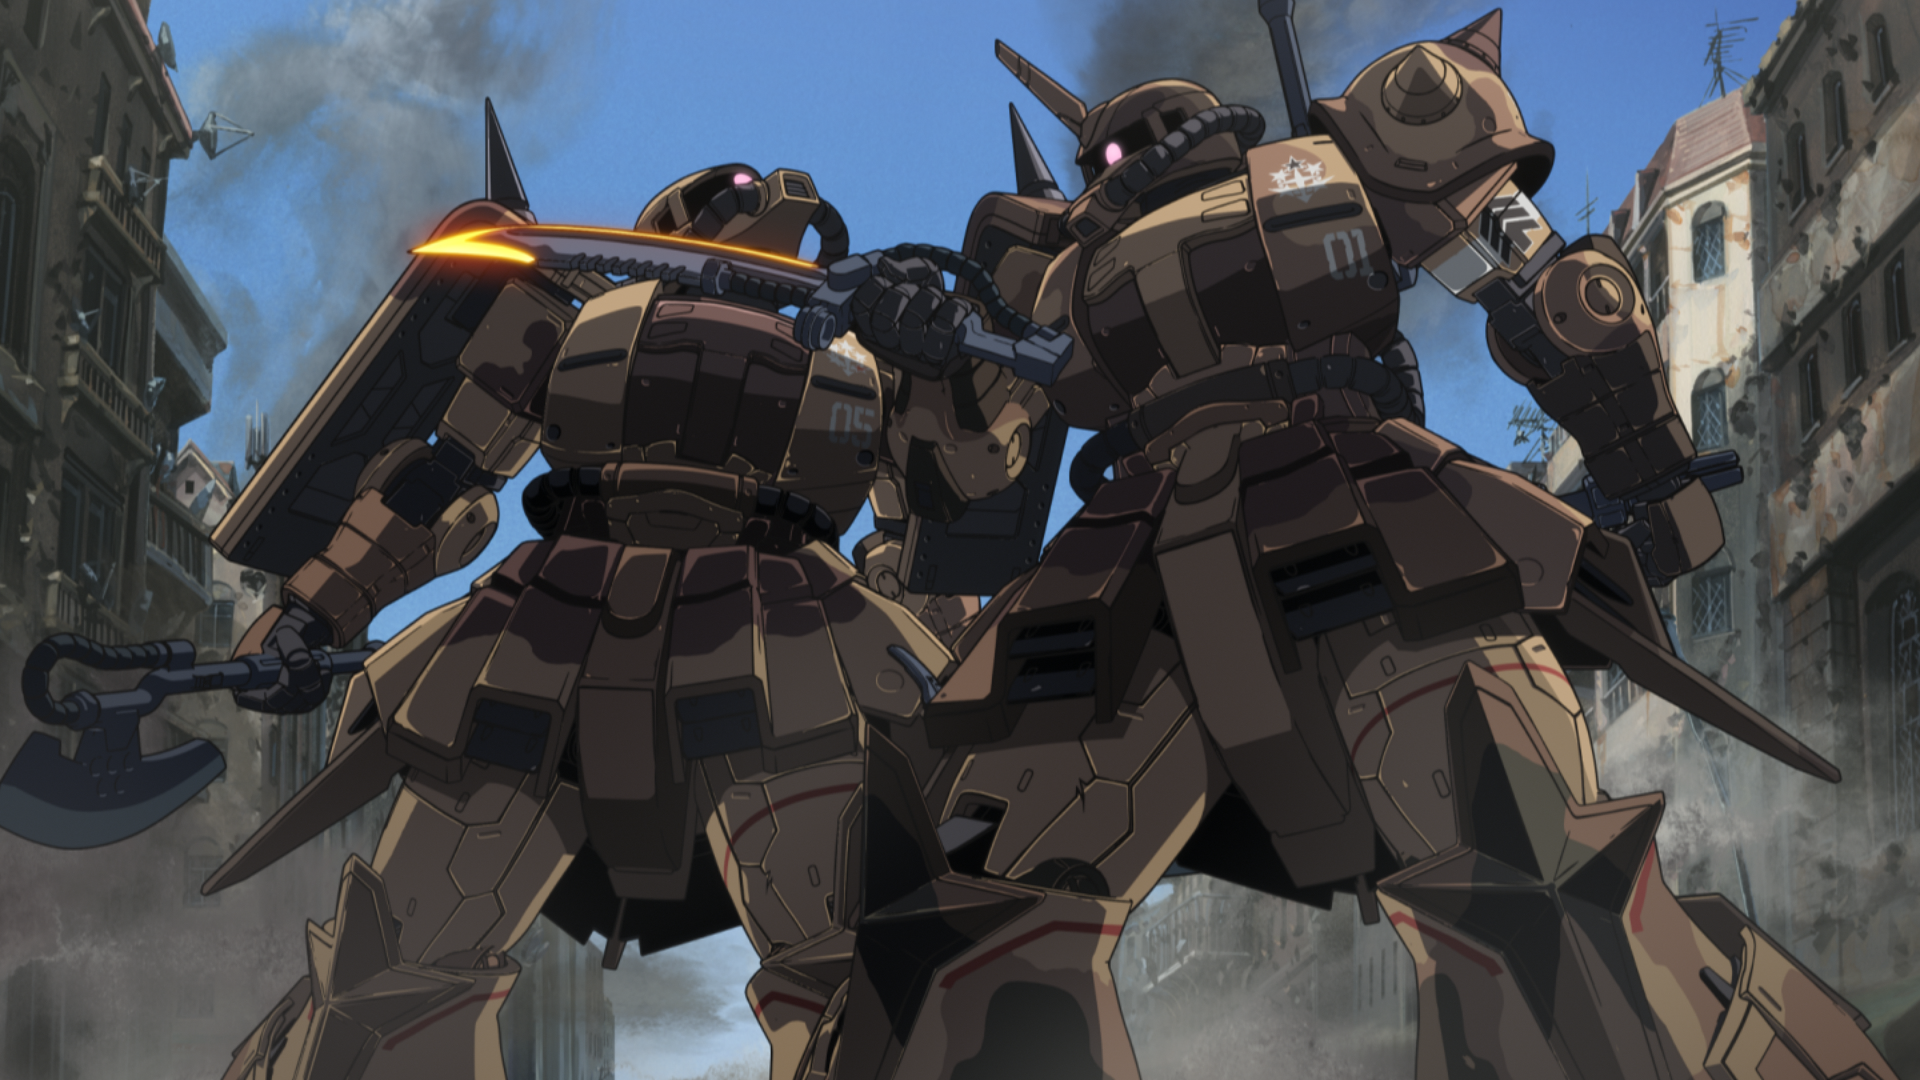 Mobile Suit Gundam Online Will Shut Down in March 2022 - Siliconera